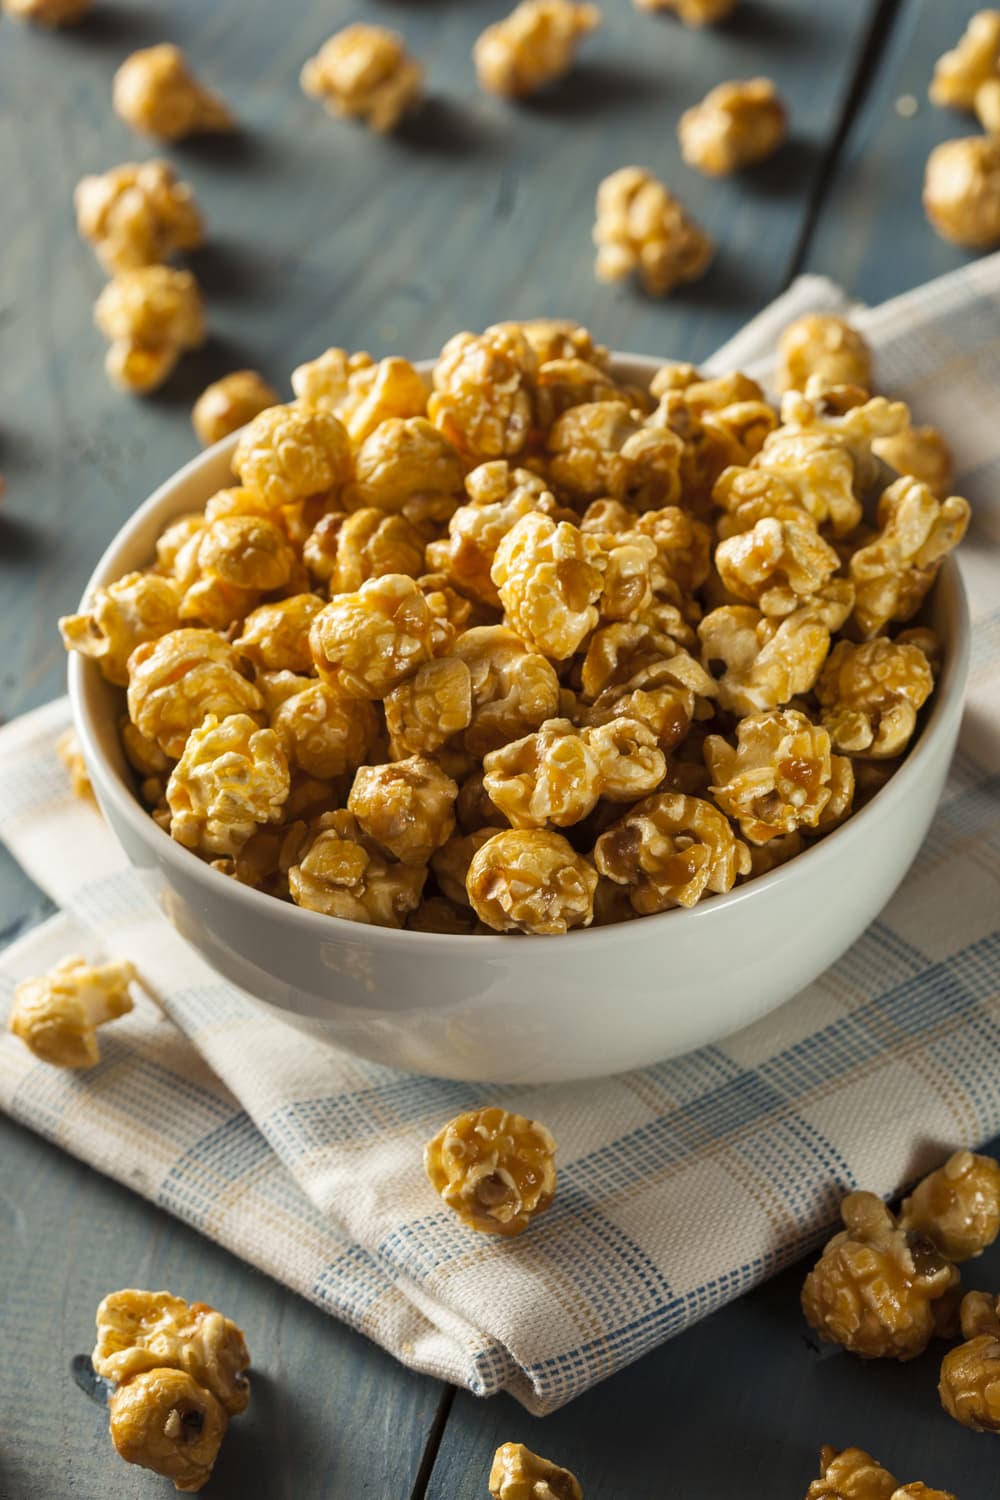 Caramel coated popcorn on a bowl.